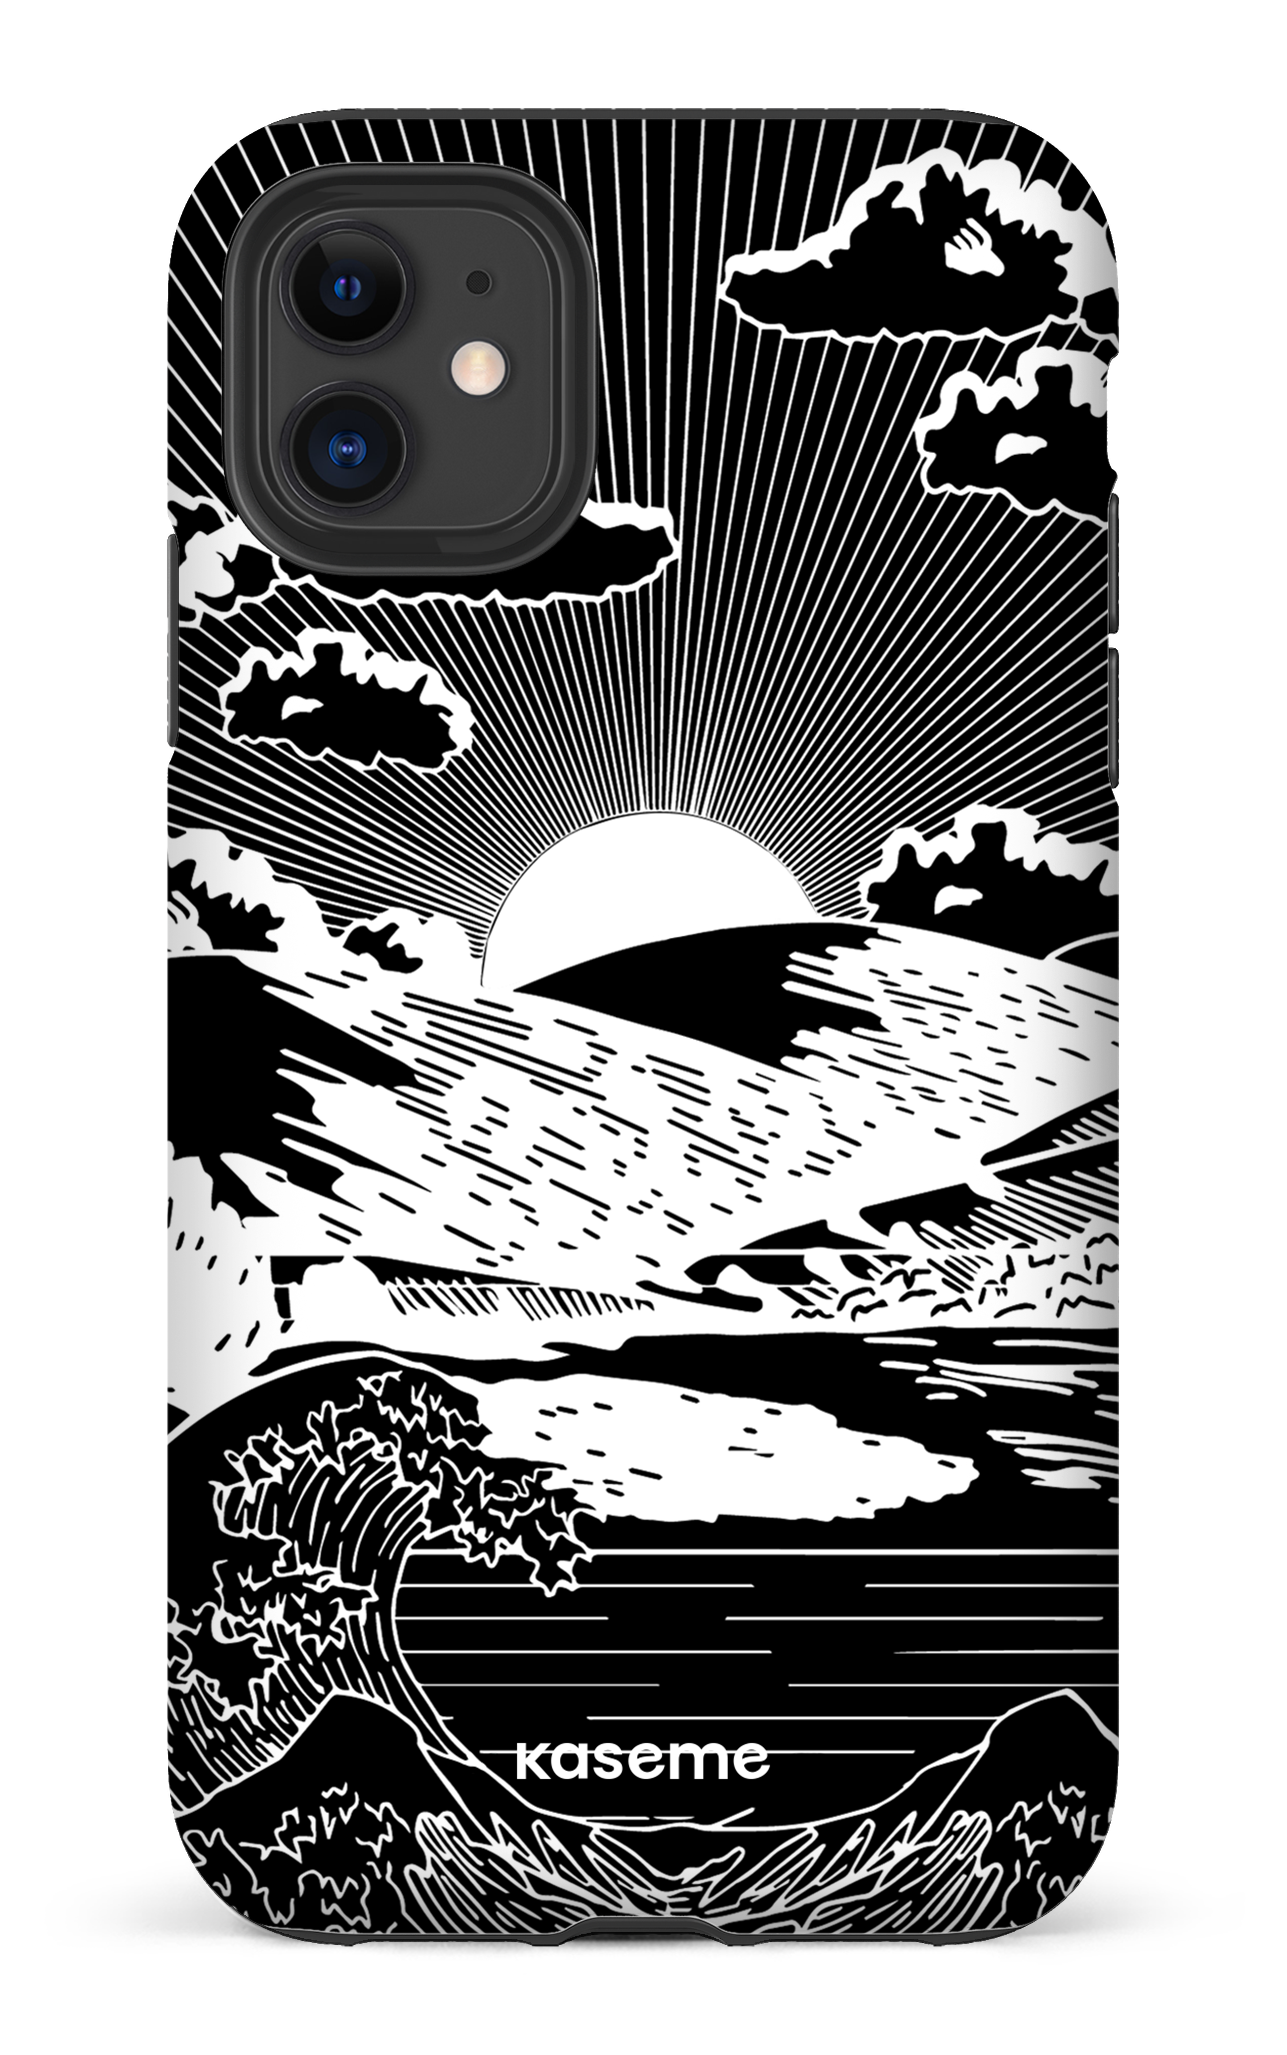 Sunbath black - iPhone 11